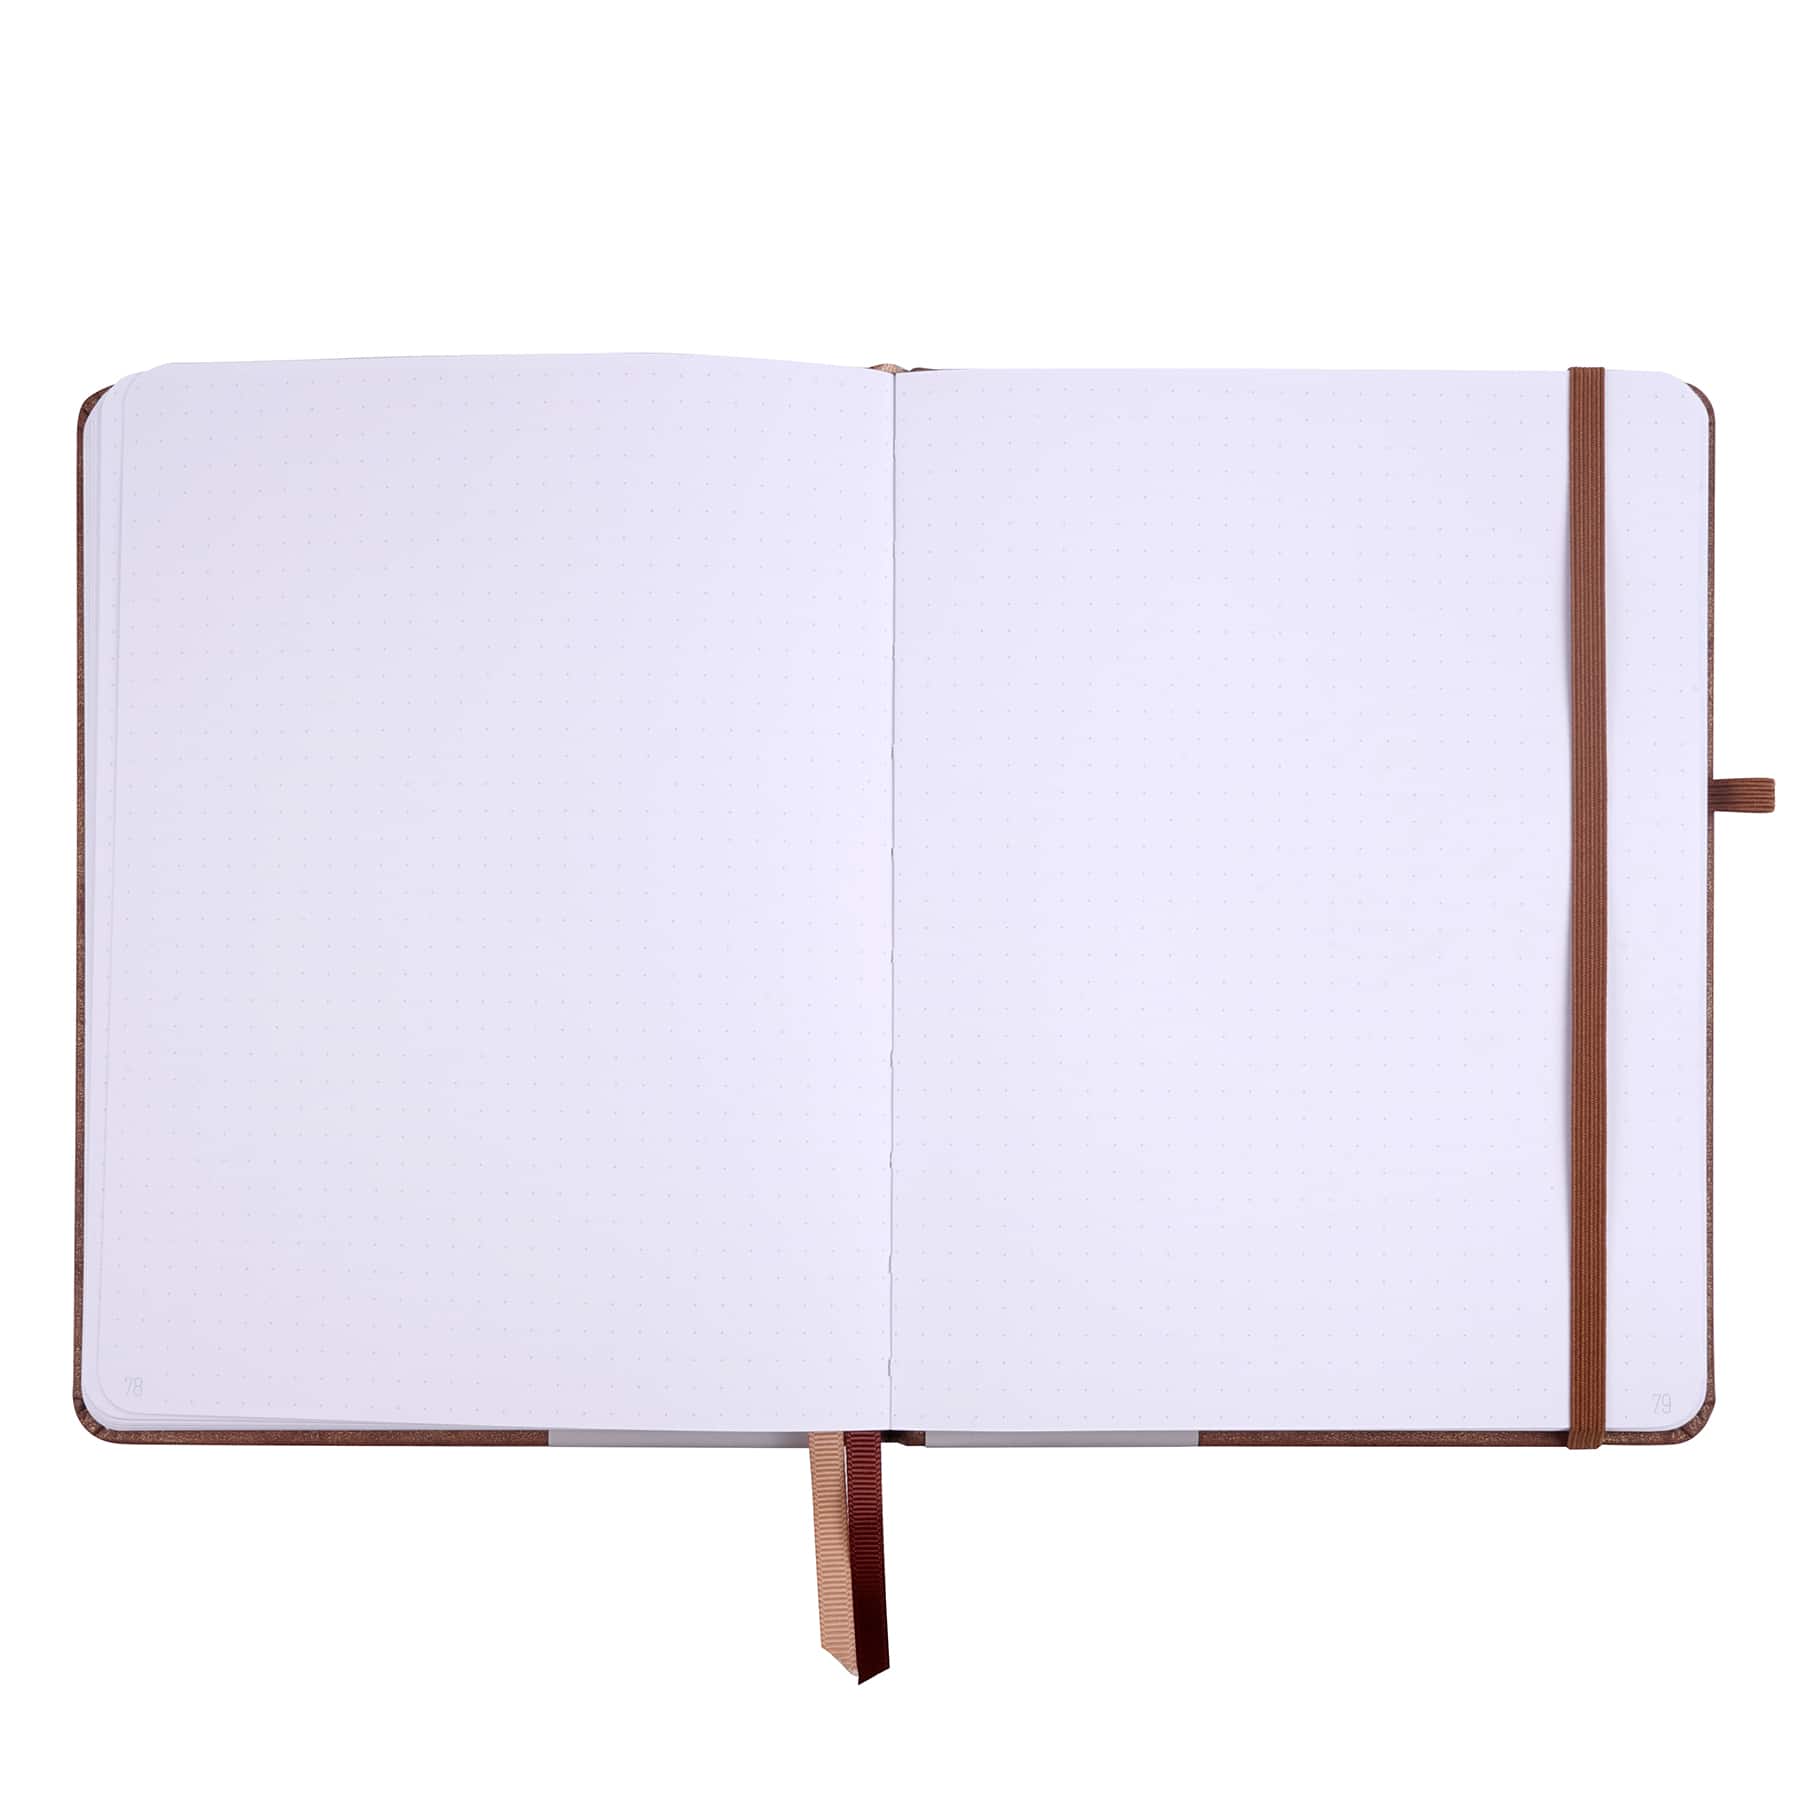 Brown Premium Hardcover Dot Journal, 6 x 8 by Artist's Loft™